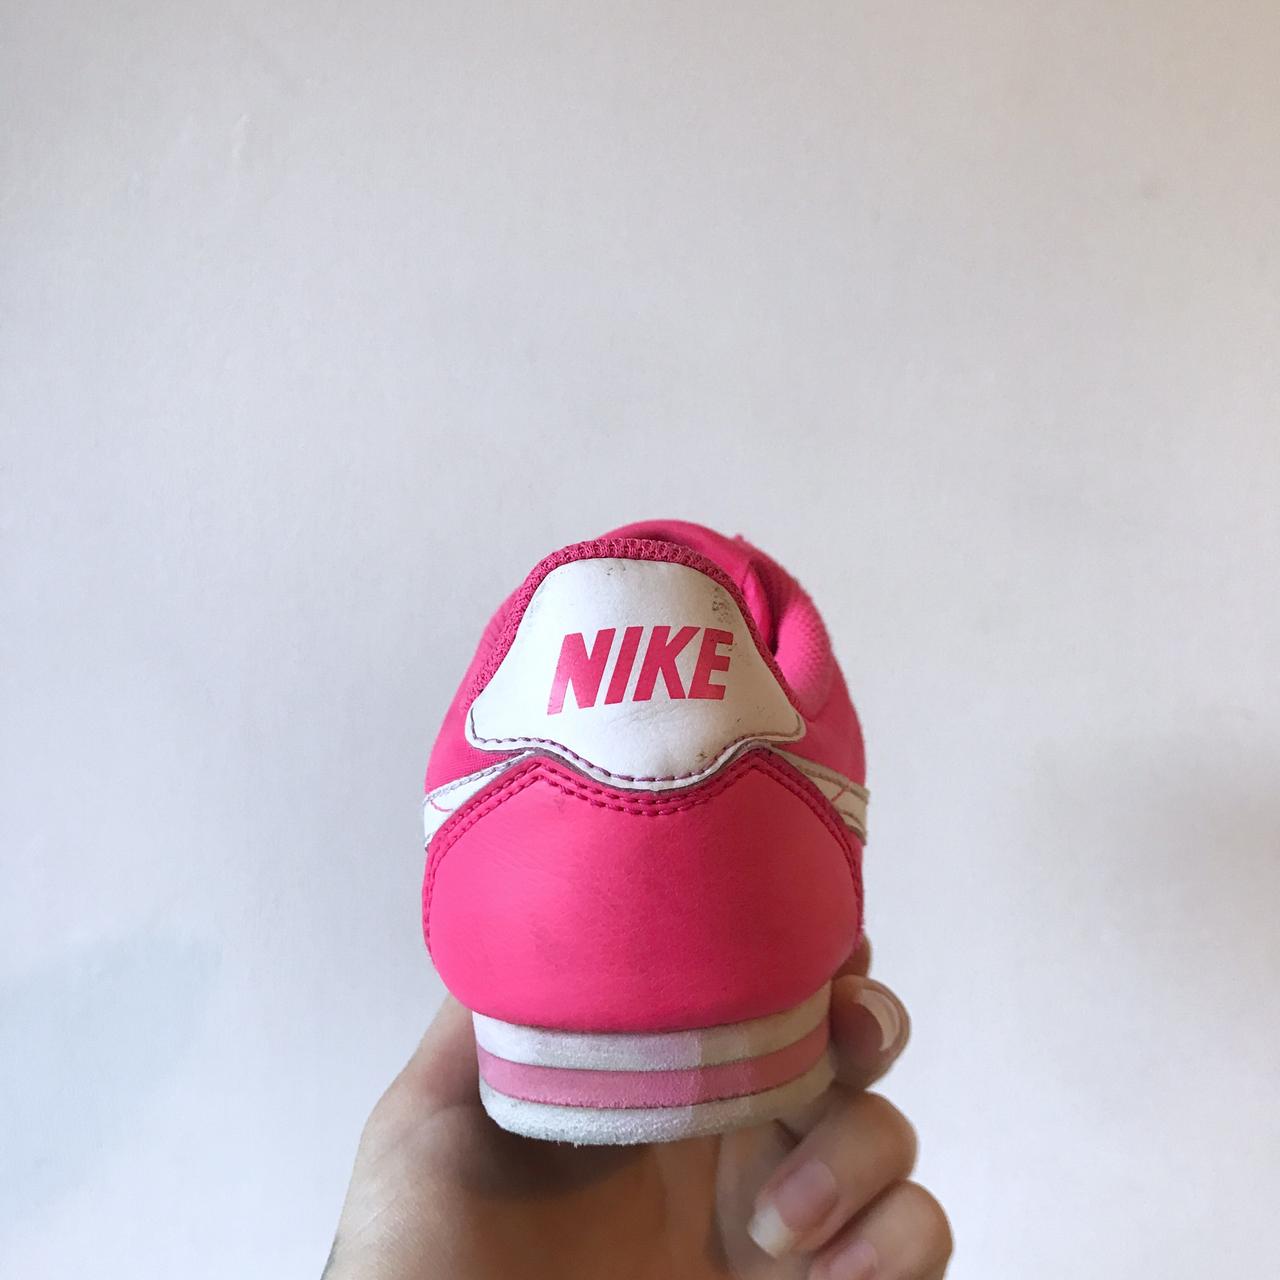 Nike mauve pink Cortez sneakers size US 10 About - Depop